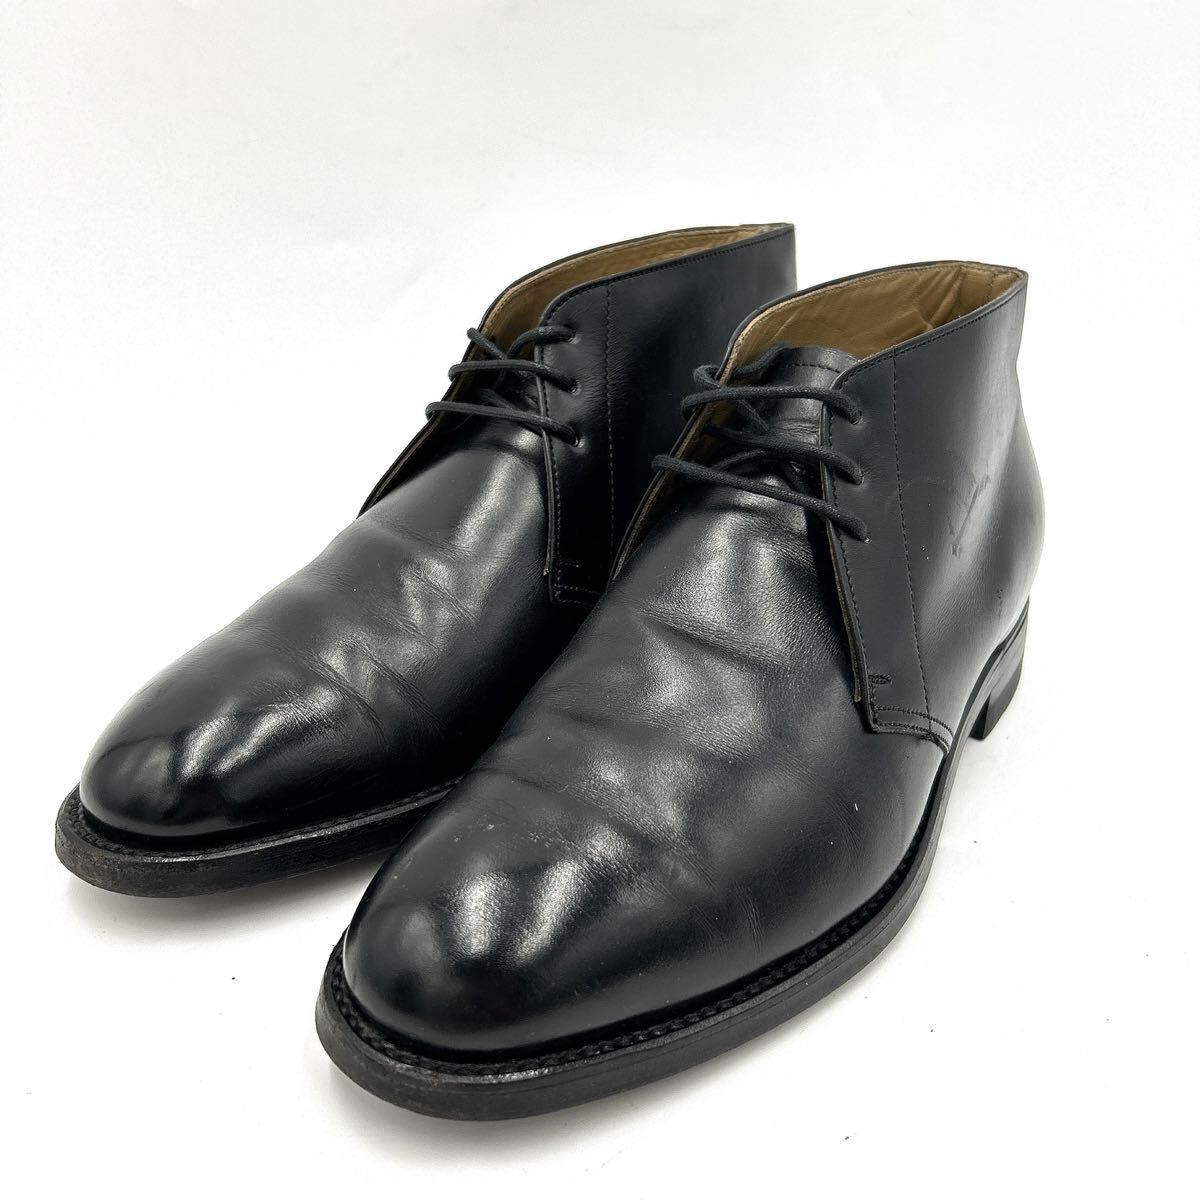 C ■ 良品 人気モデル '極上レザー使用' REGAL STANDARDS リーガル 本革 チャッカーブーツ 革靴 24.5cm メンズ 紳士靴 シューズ BLACK の画像1